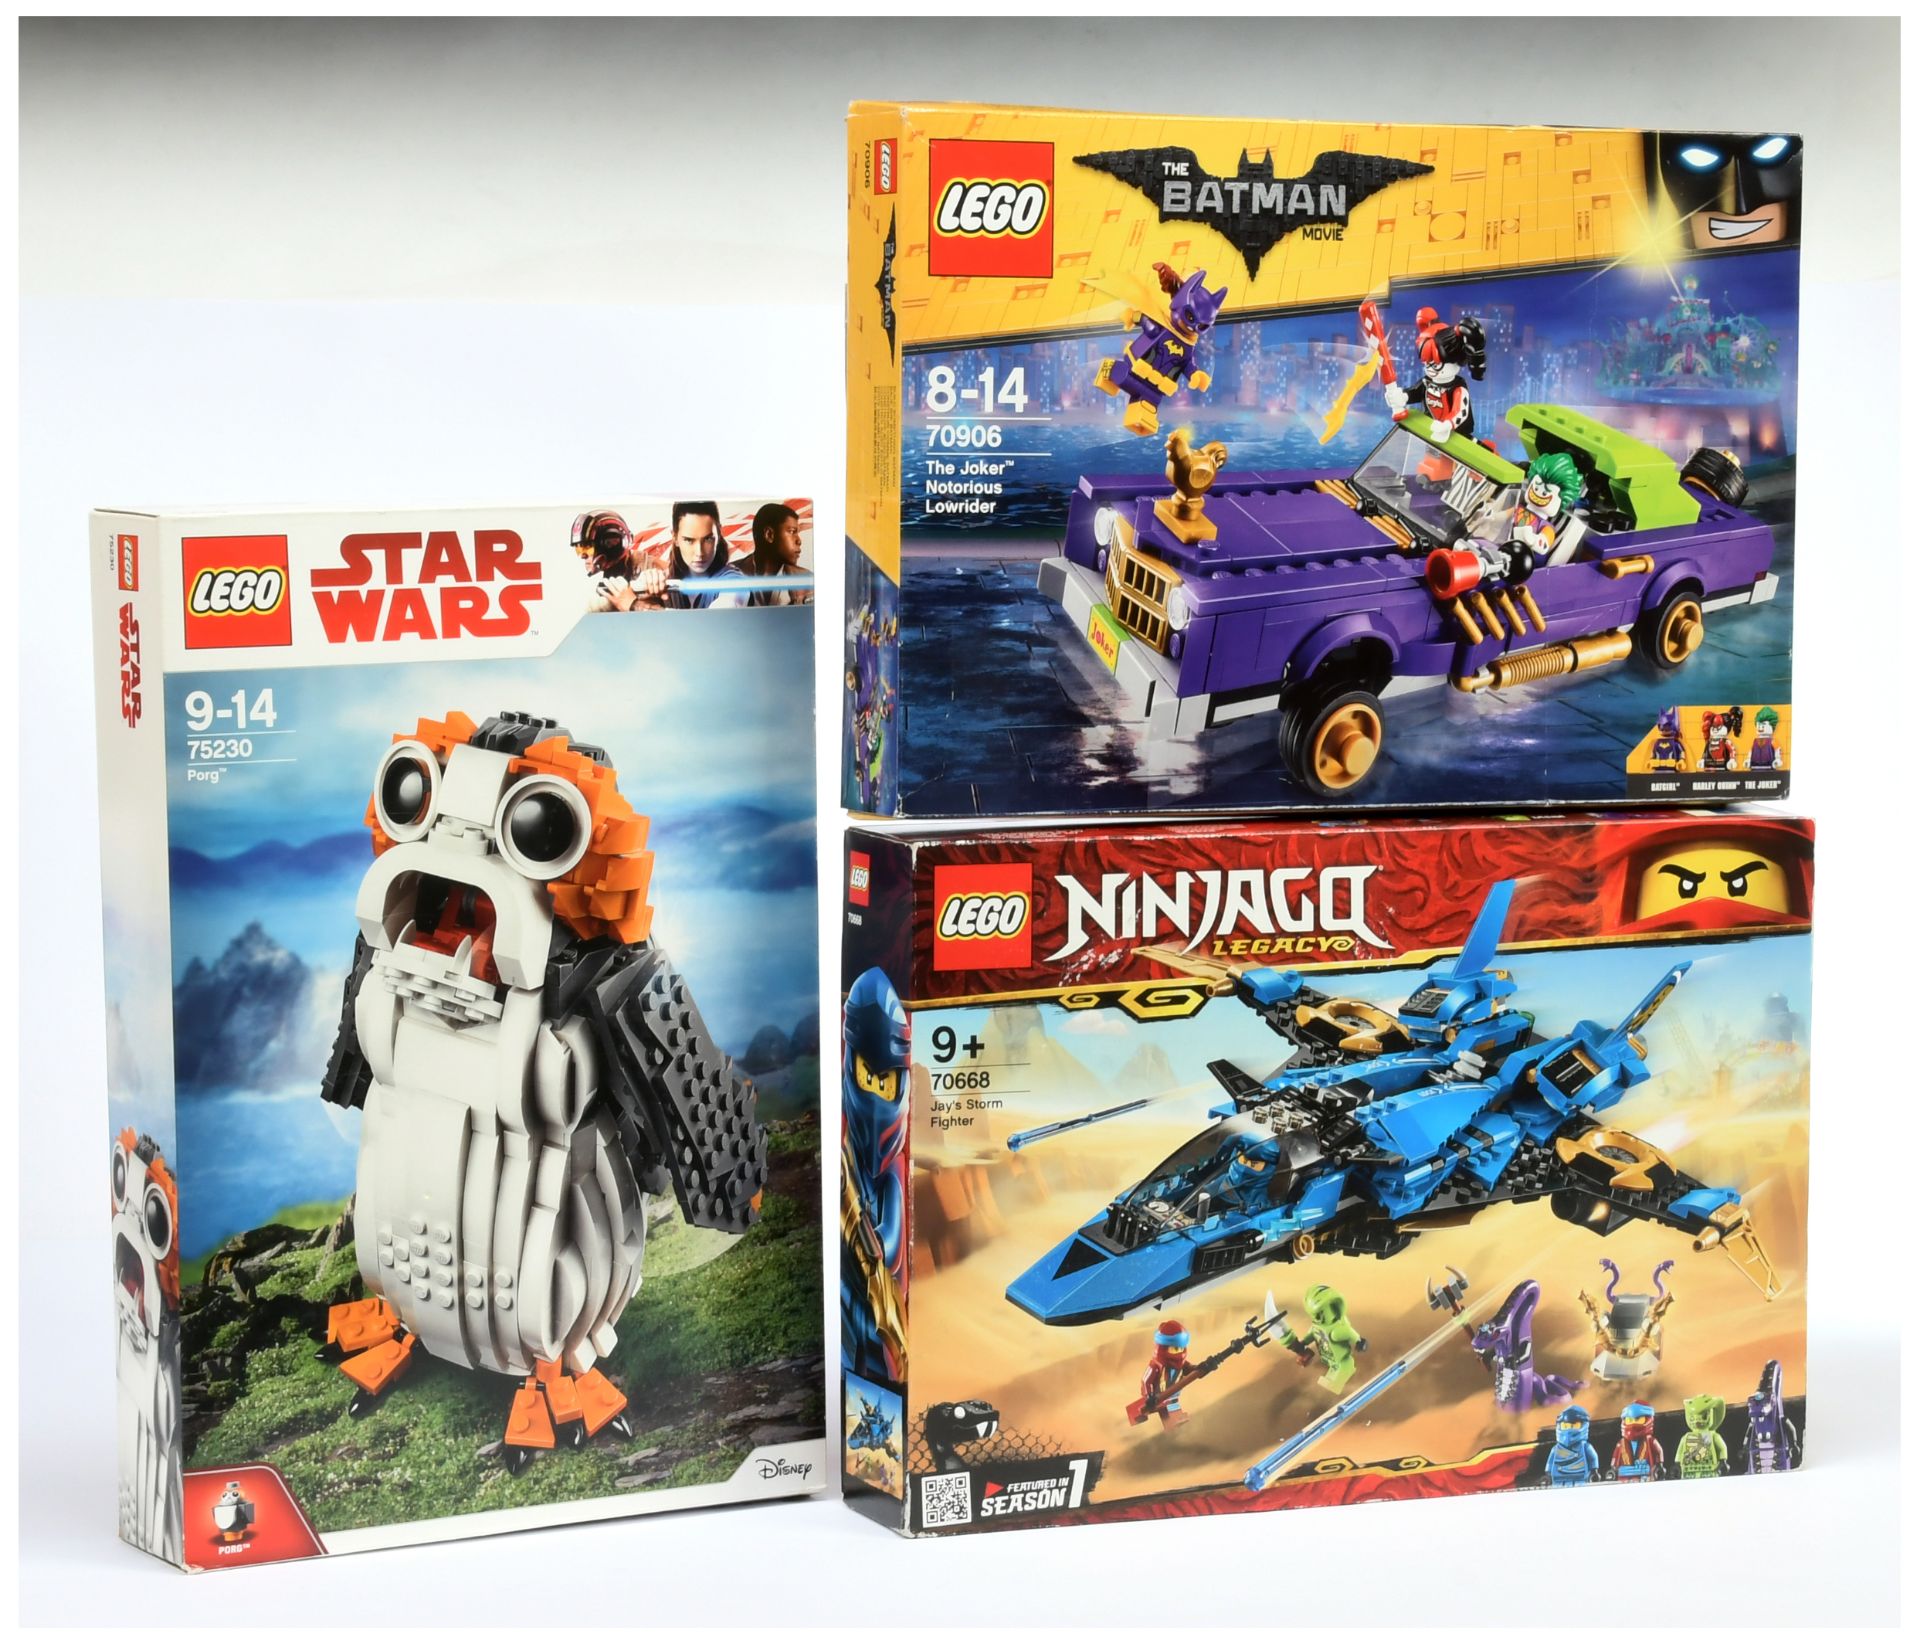 Lego mixed group (1) 70688 Ninjago Legacy Jay's Storm Fighter - Sealed Set (2) 70906 The Batman M...